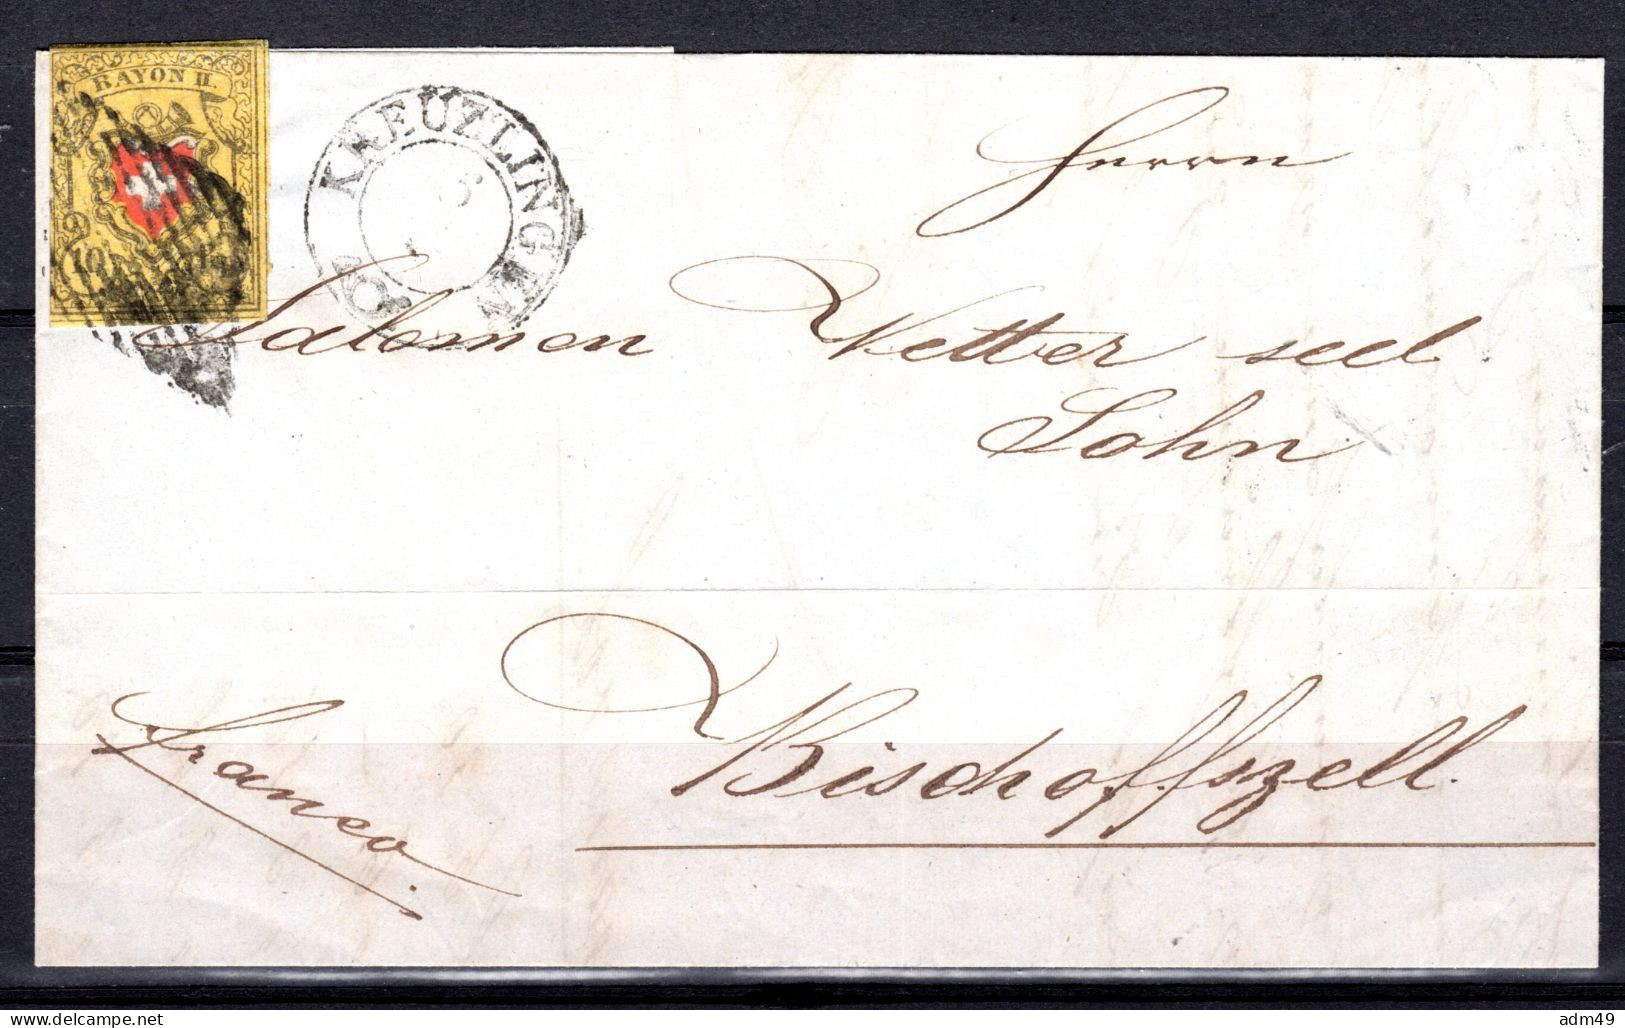 SCHWEIZ, 1850 Rayon II Gelb, Auf Brief - 1843-1852 Timbres Cantonaux Et  Fédéraux